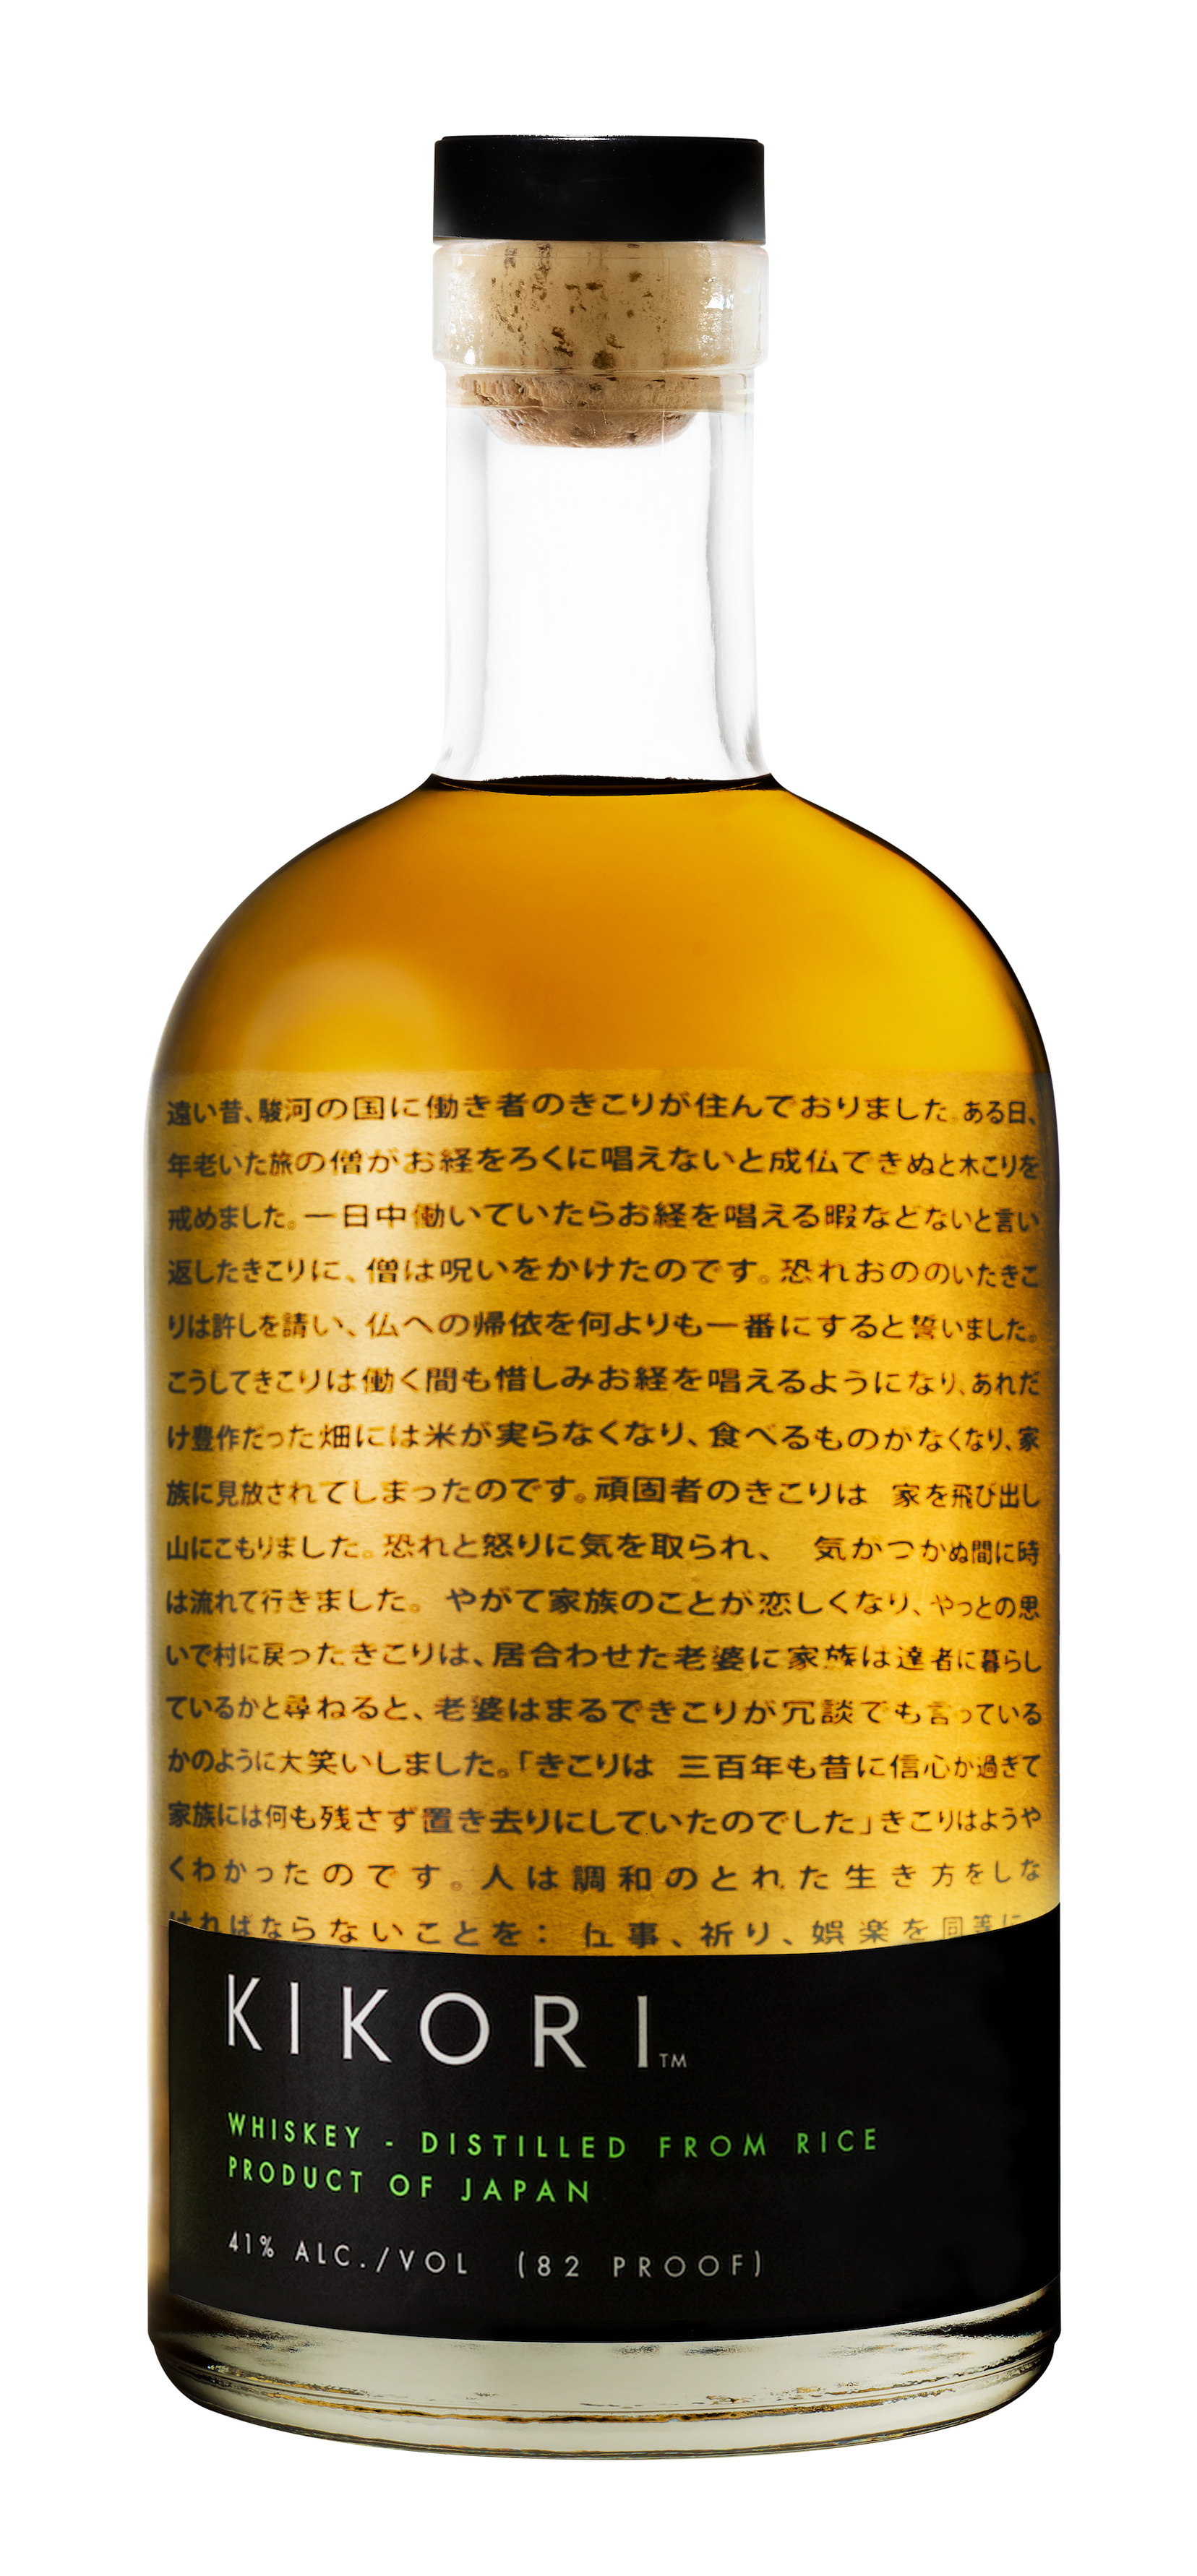 Kikroi-bottle-image